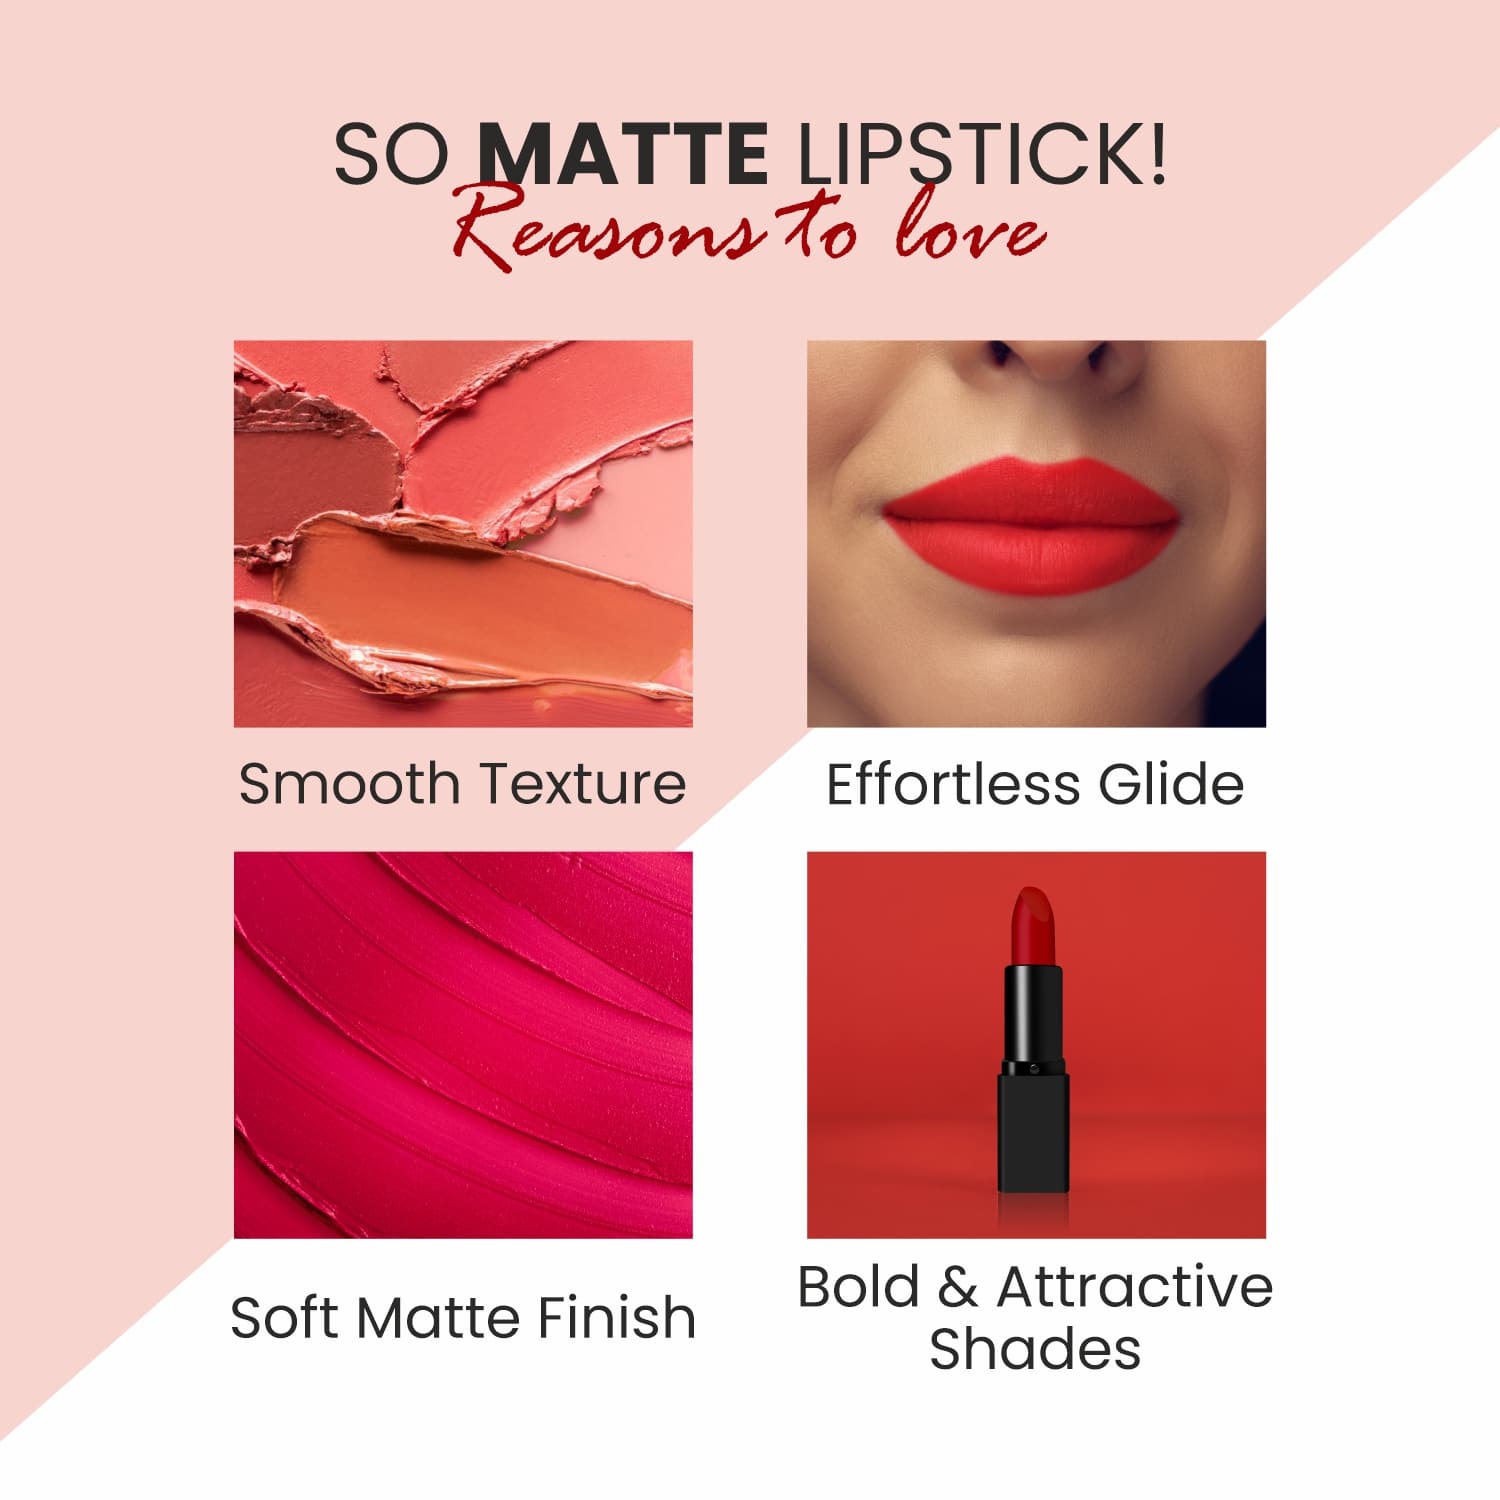 Wow Matte Lipstick - 13 Lavish Love